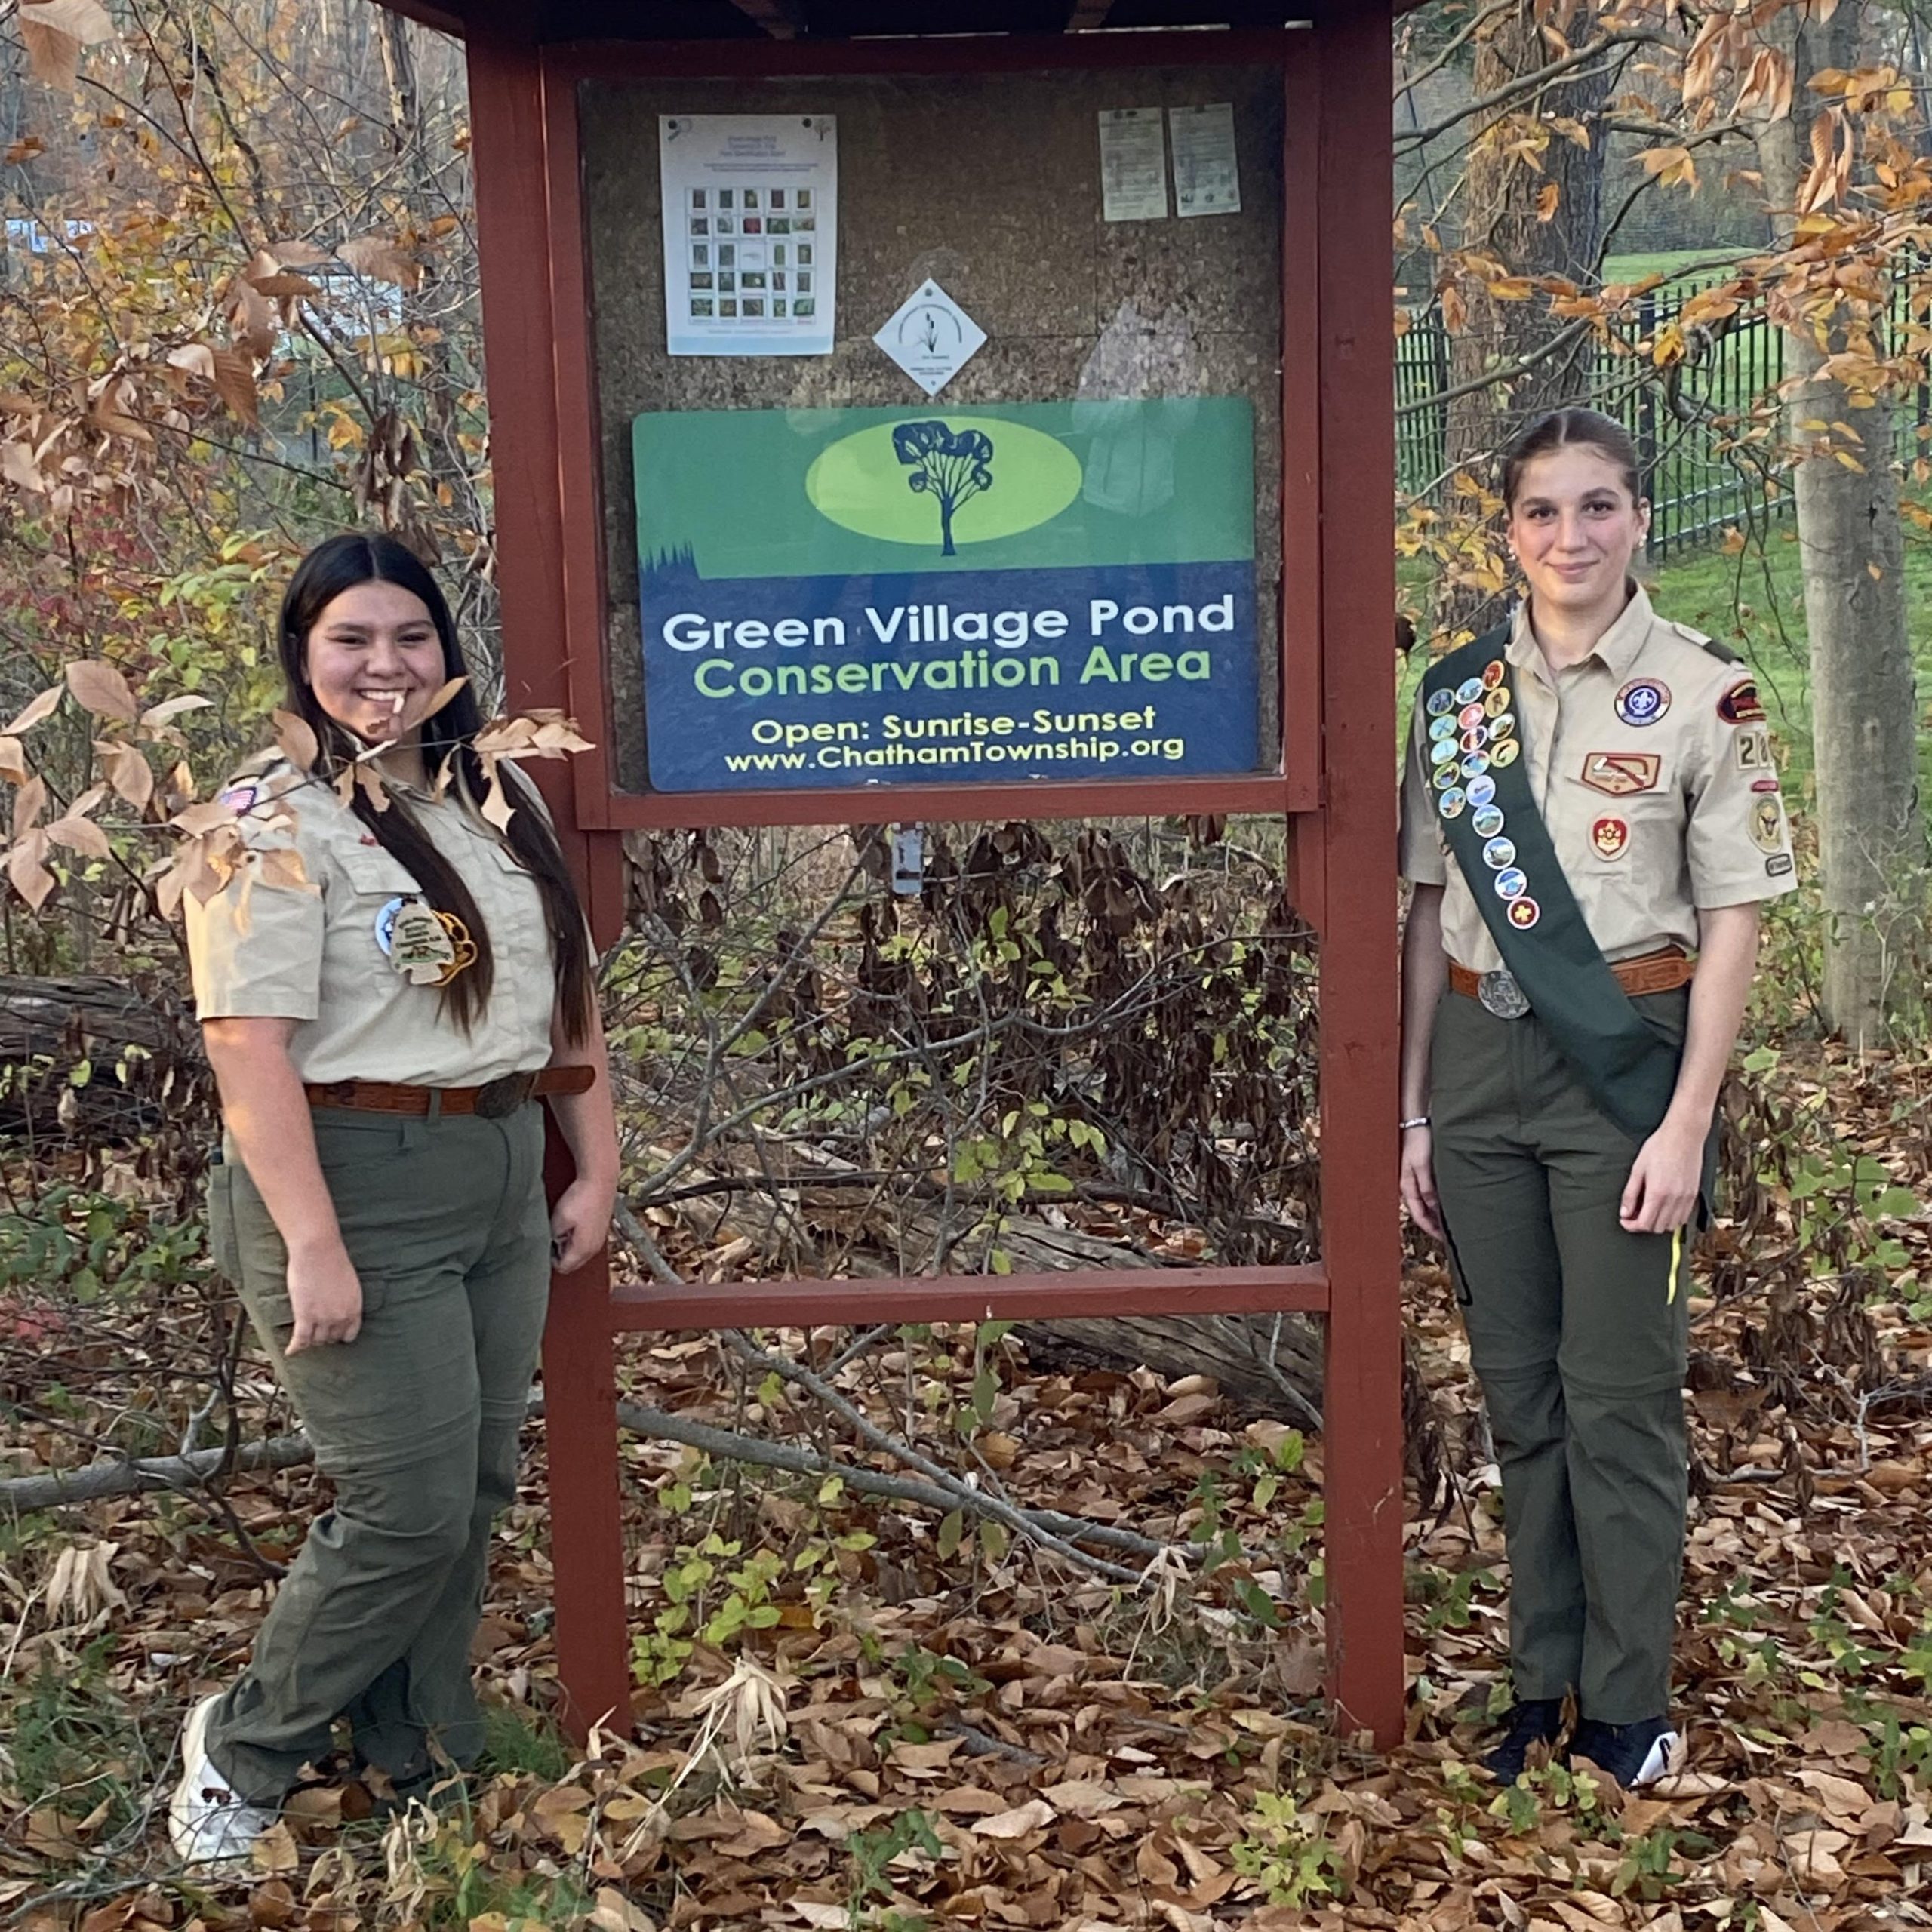 Maria DiPasquale and Sofia Maciejewski earn Eagle Scout Rank